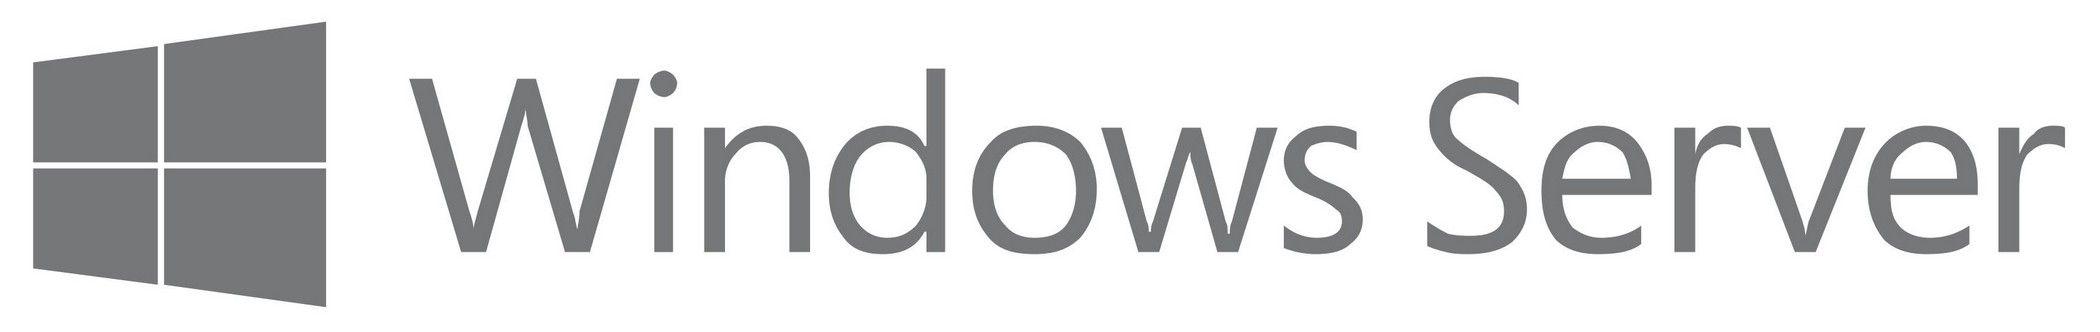 Black Windows Server Logo - Windows Server Logo Free Vector Download - FreeLogoVectors